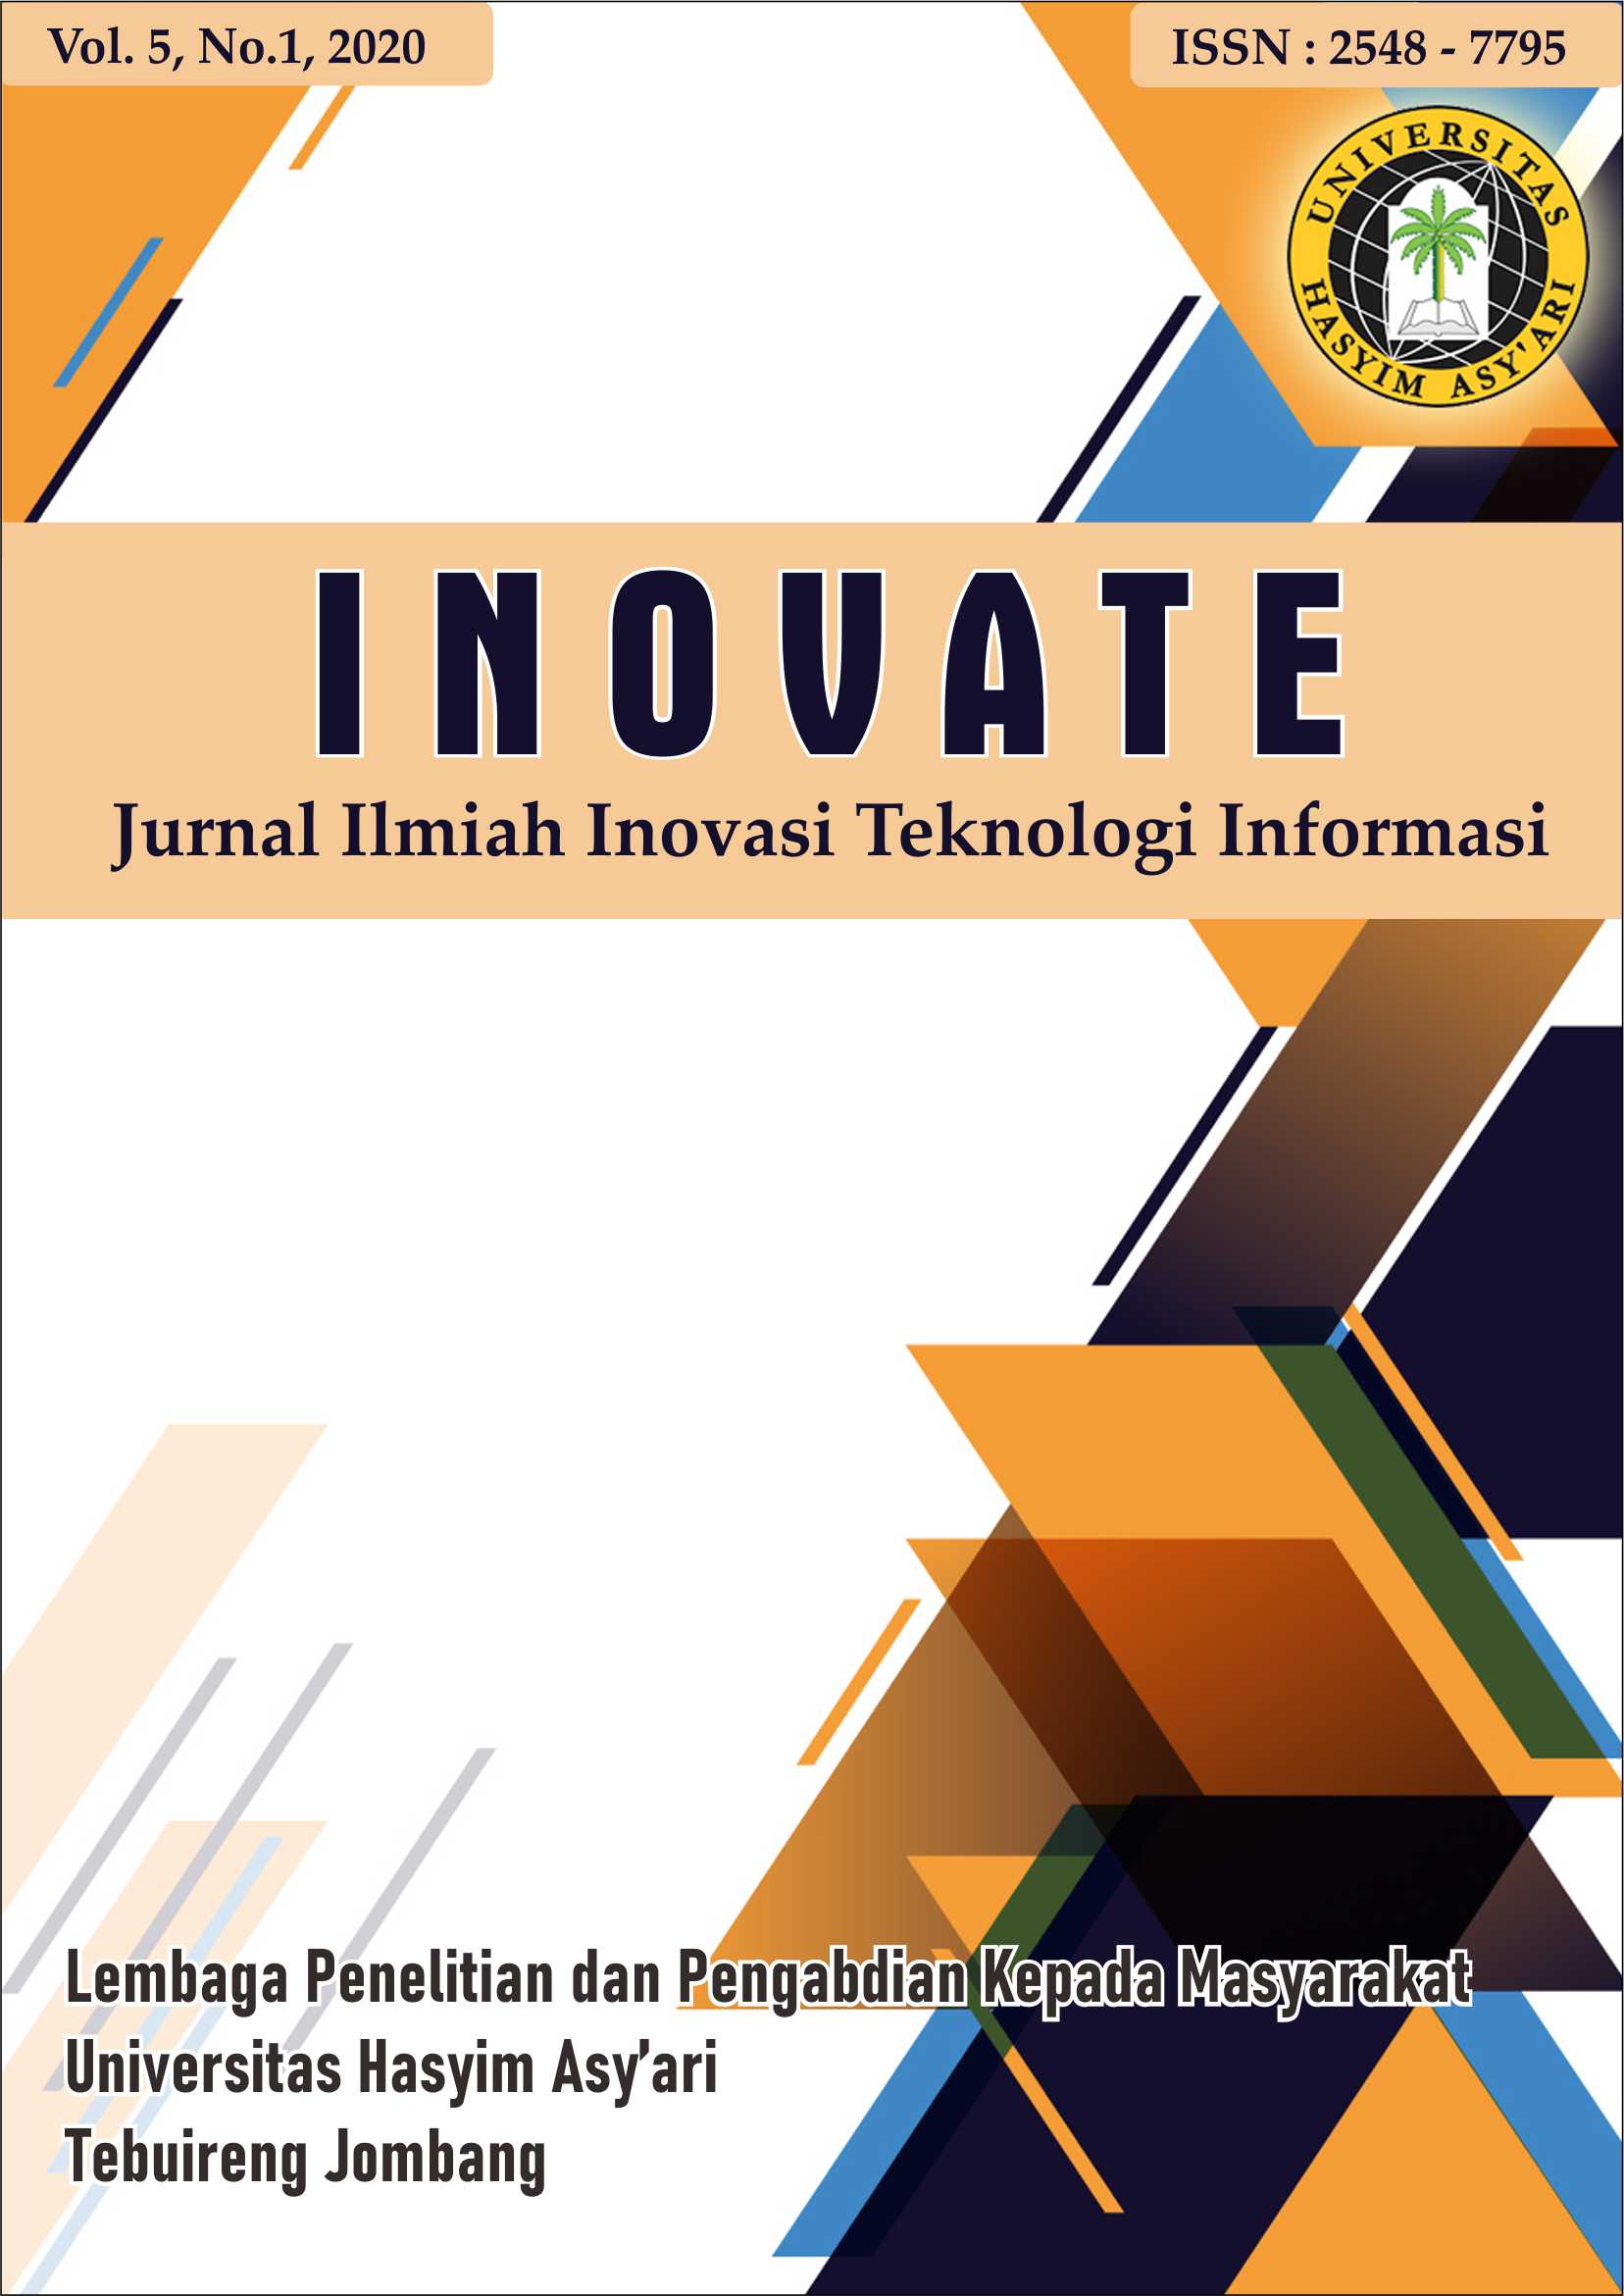 					View Vol. 5 No. 1 (2020): Inovate Vol.05 No.1 Tahun 2020
				